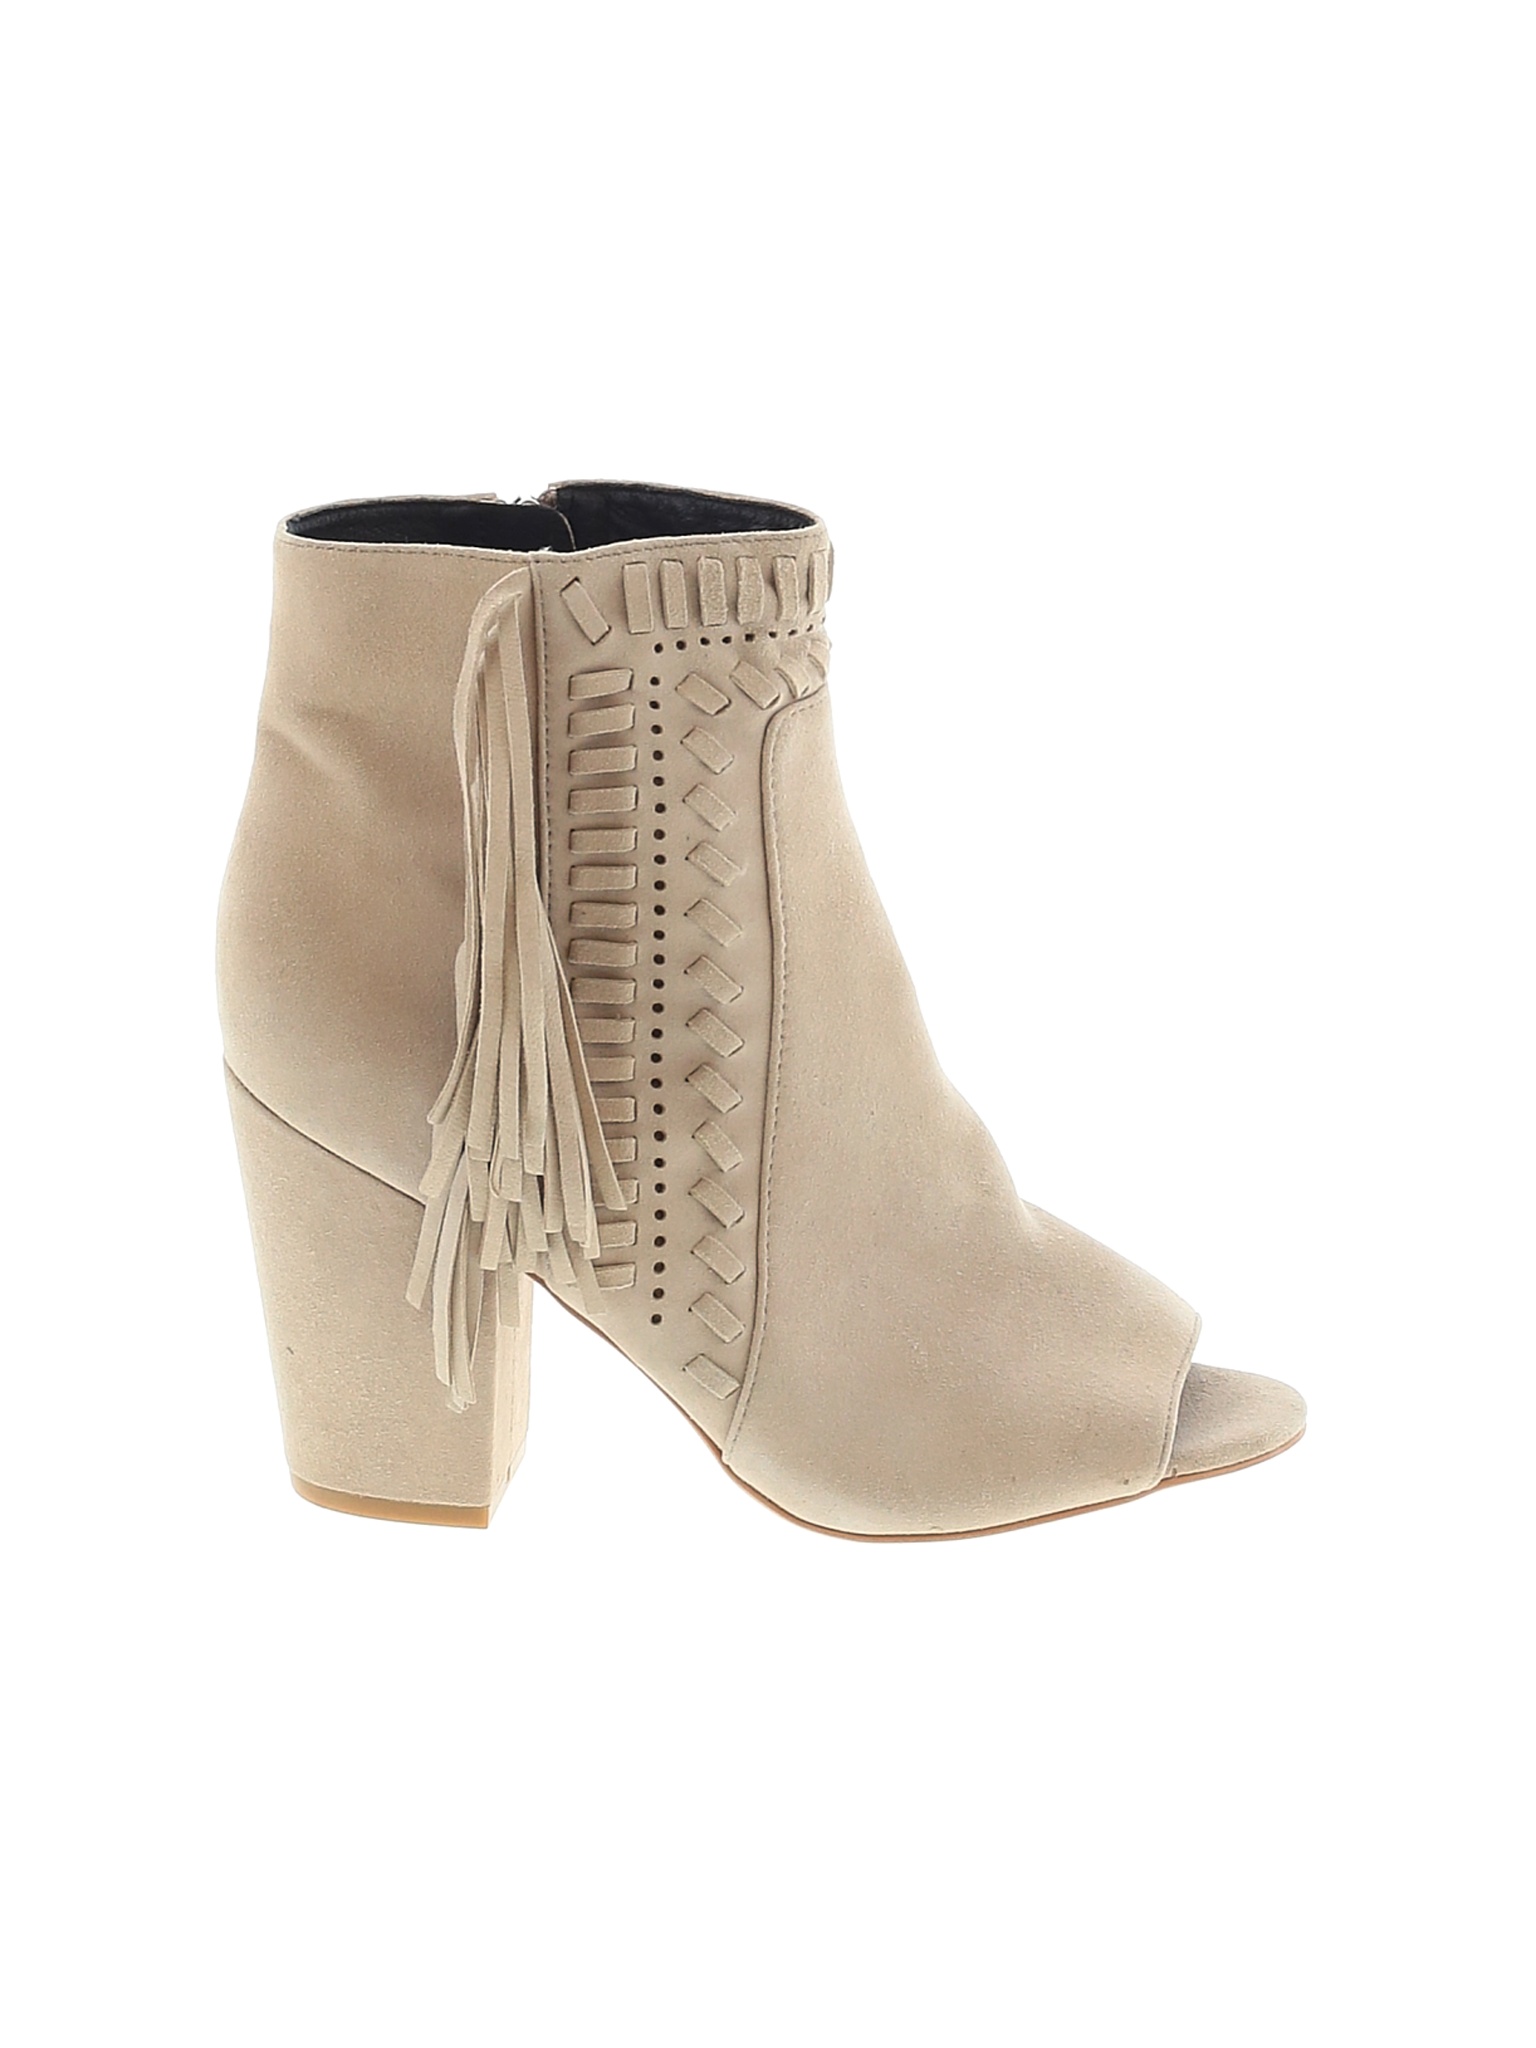 Rebecca Minkoff Women Brown Boots US 8.5 | eBay